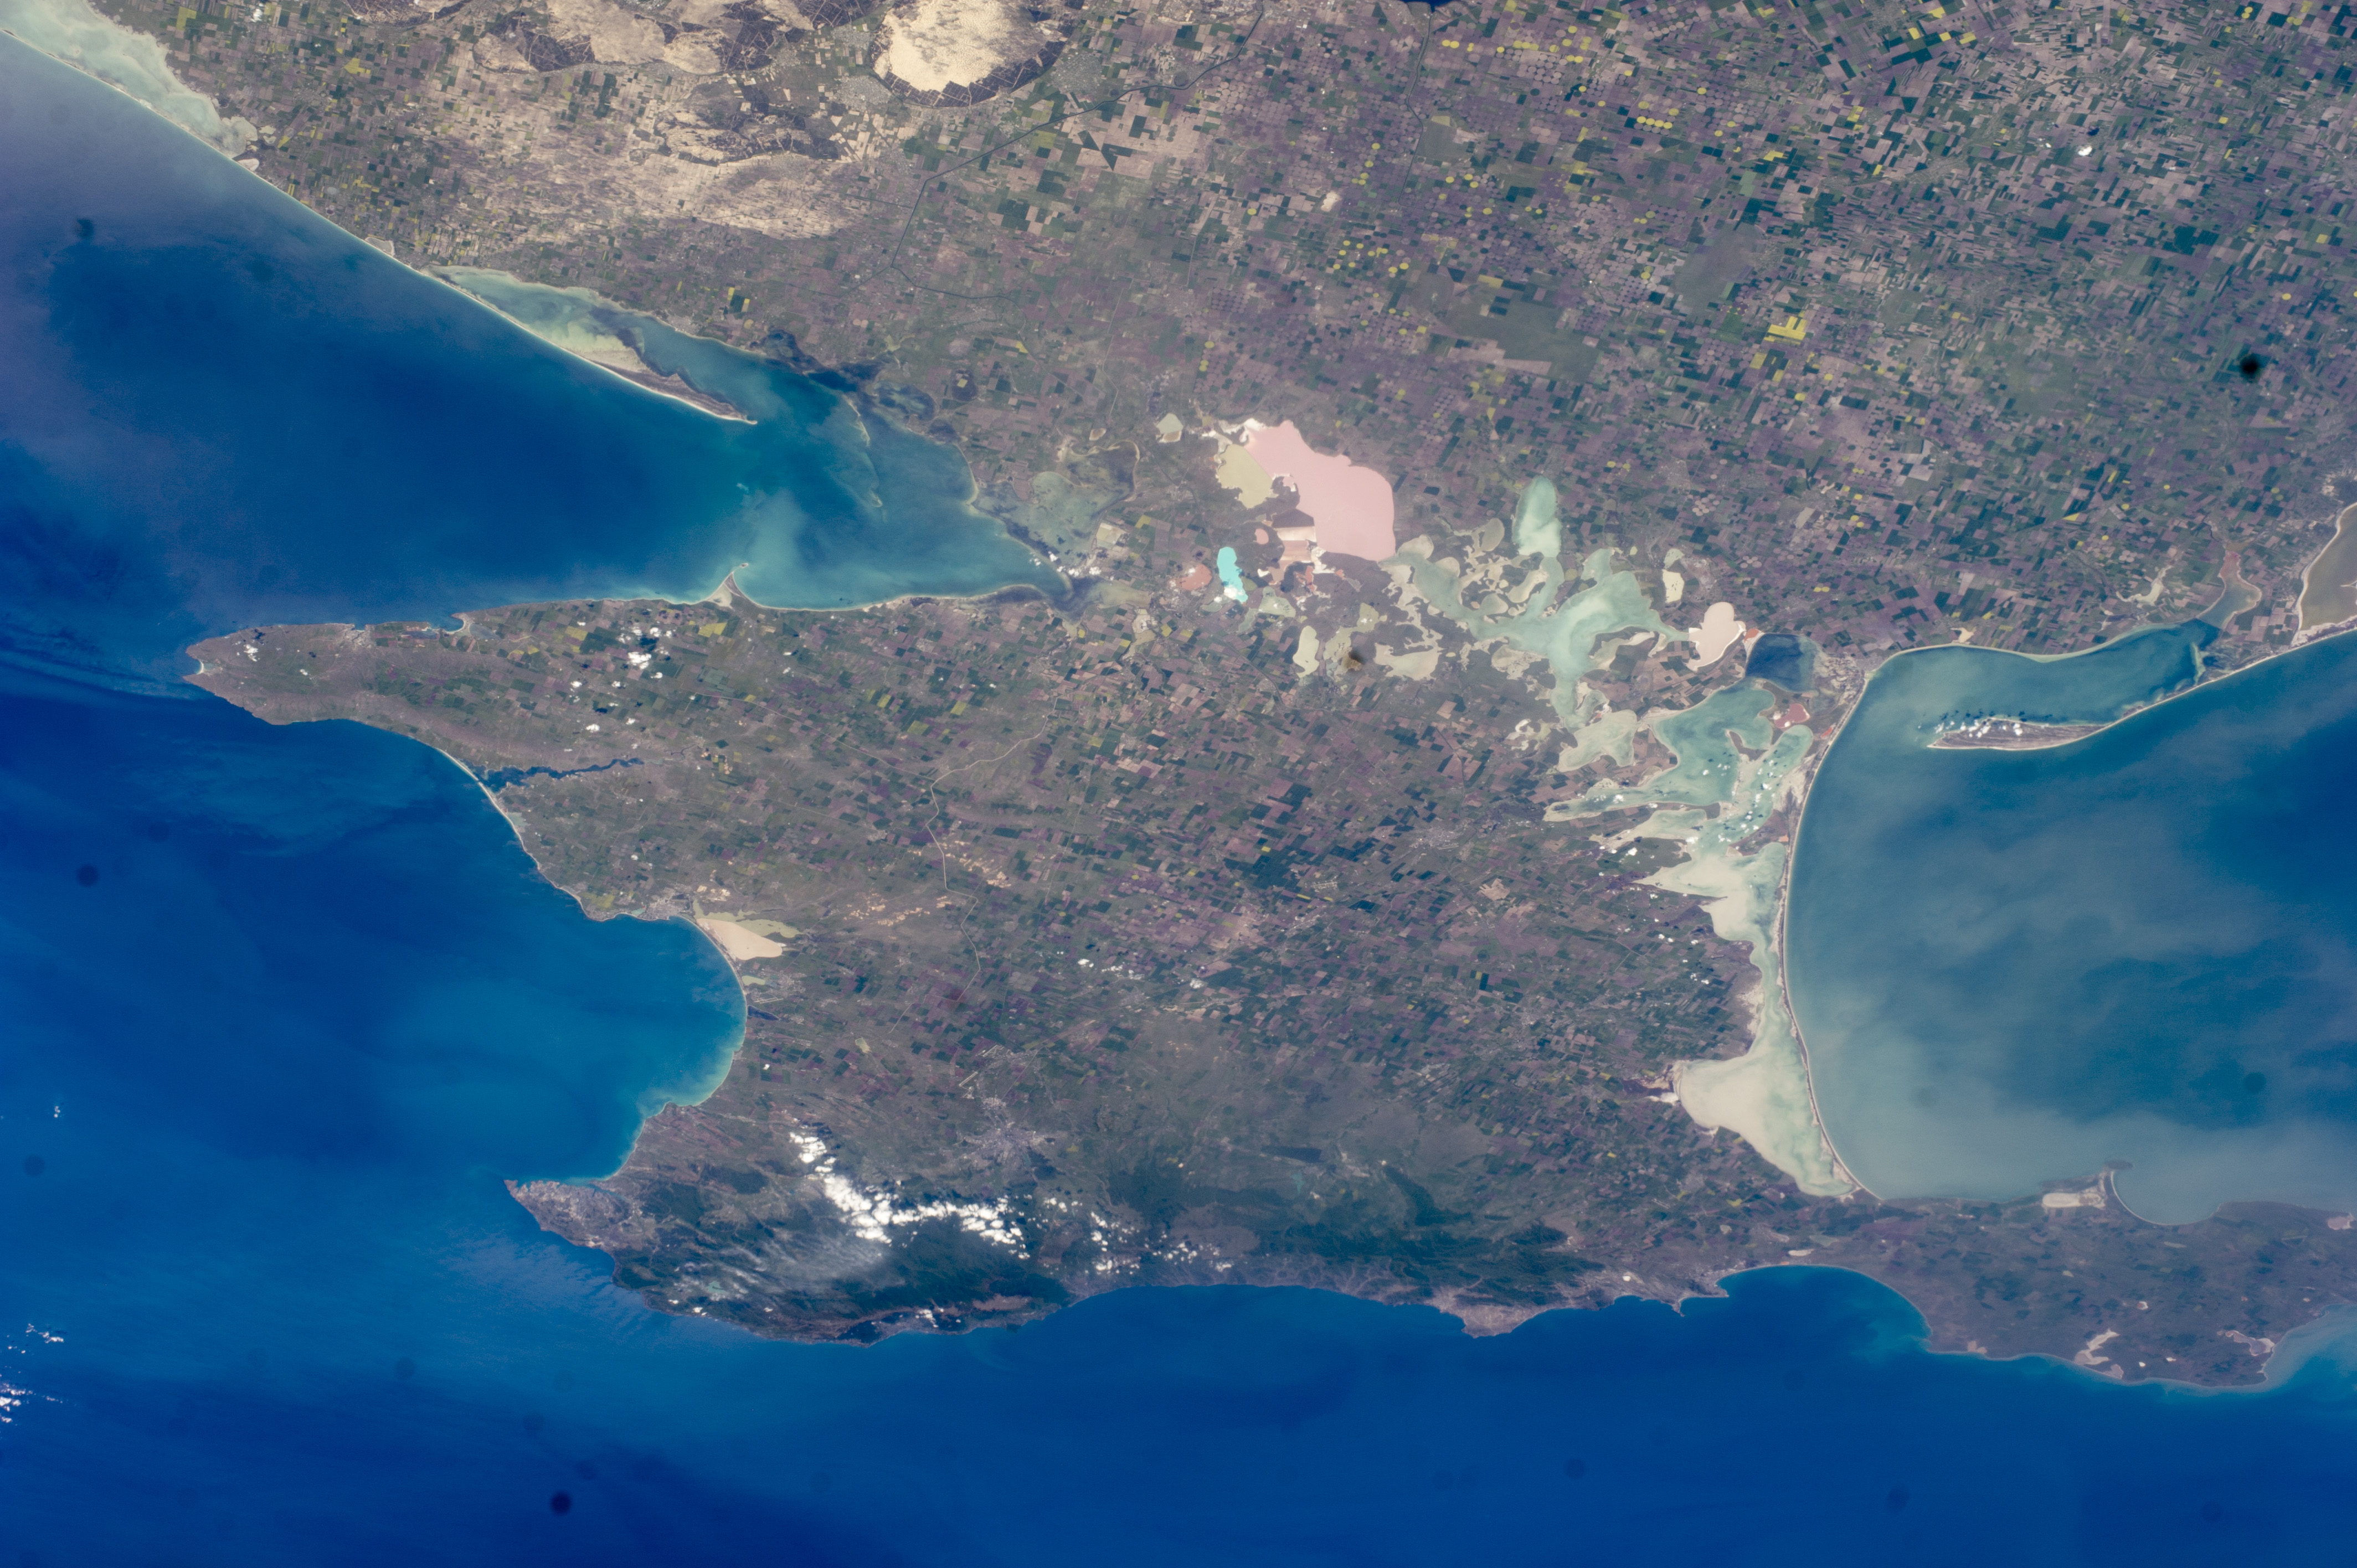 crimean peninsula landscape